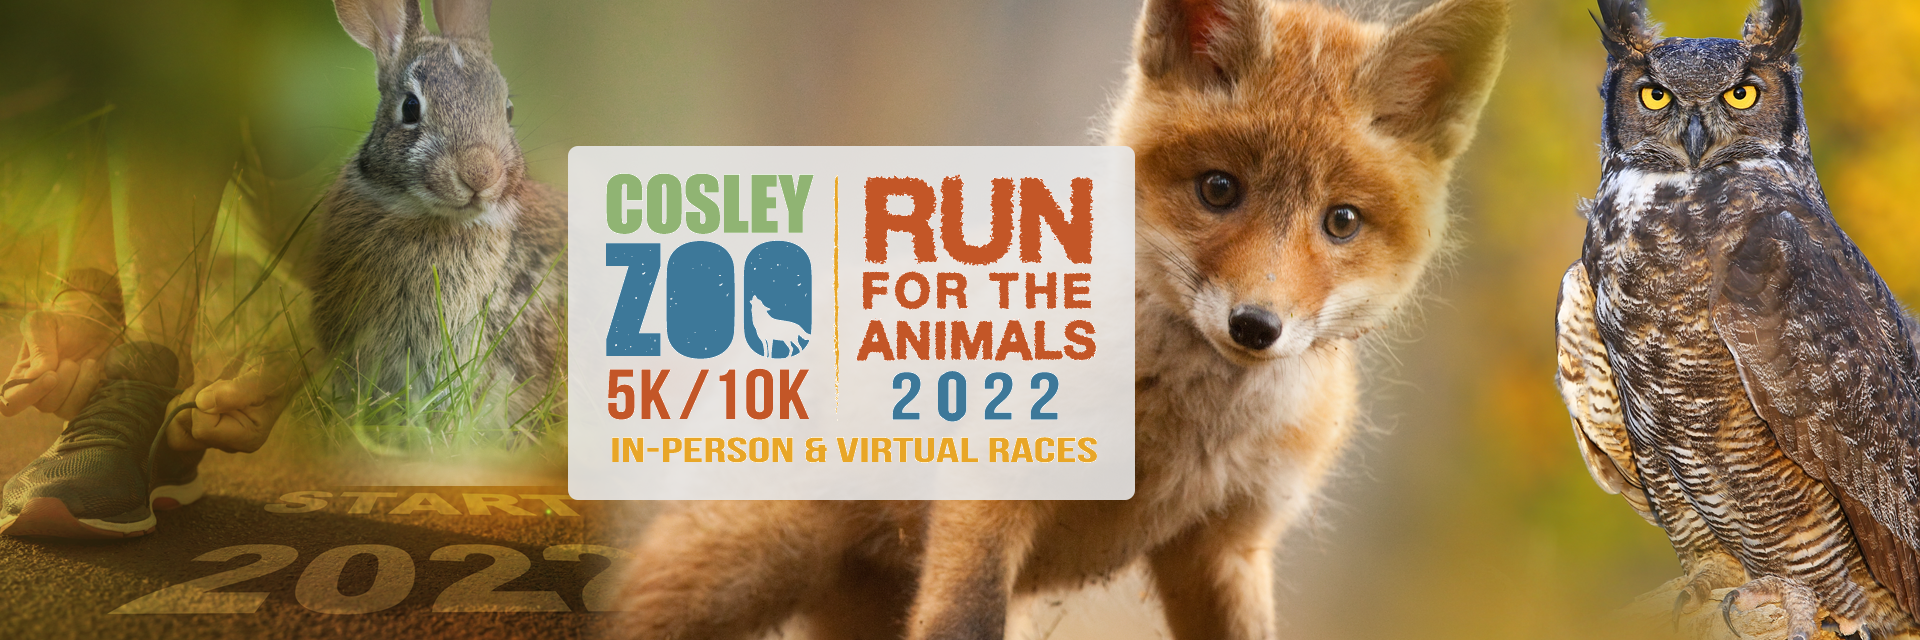 Run for the Animals-Cosley Zoo-Wheaton